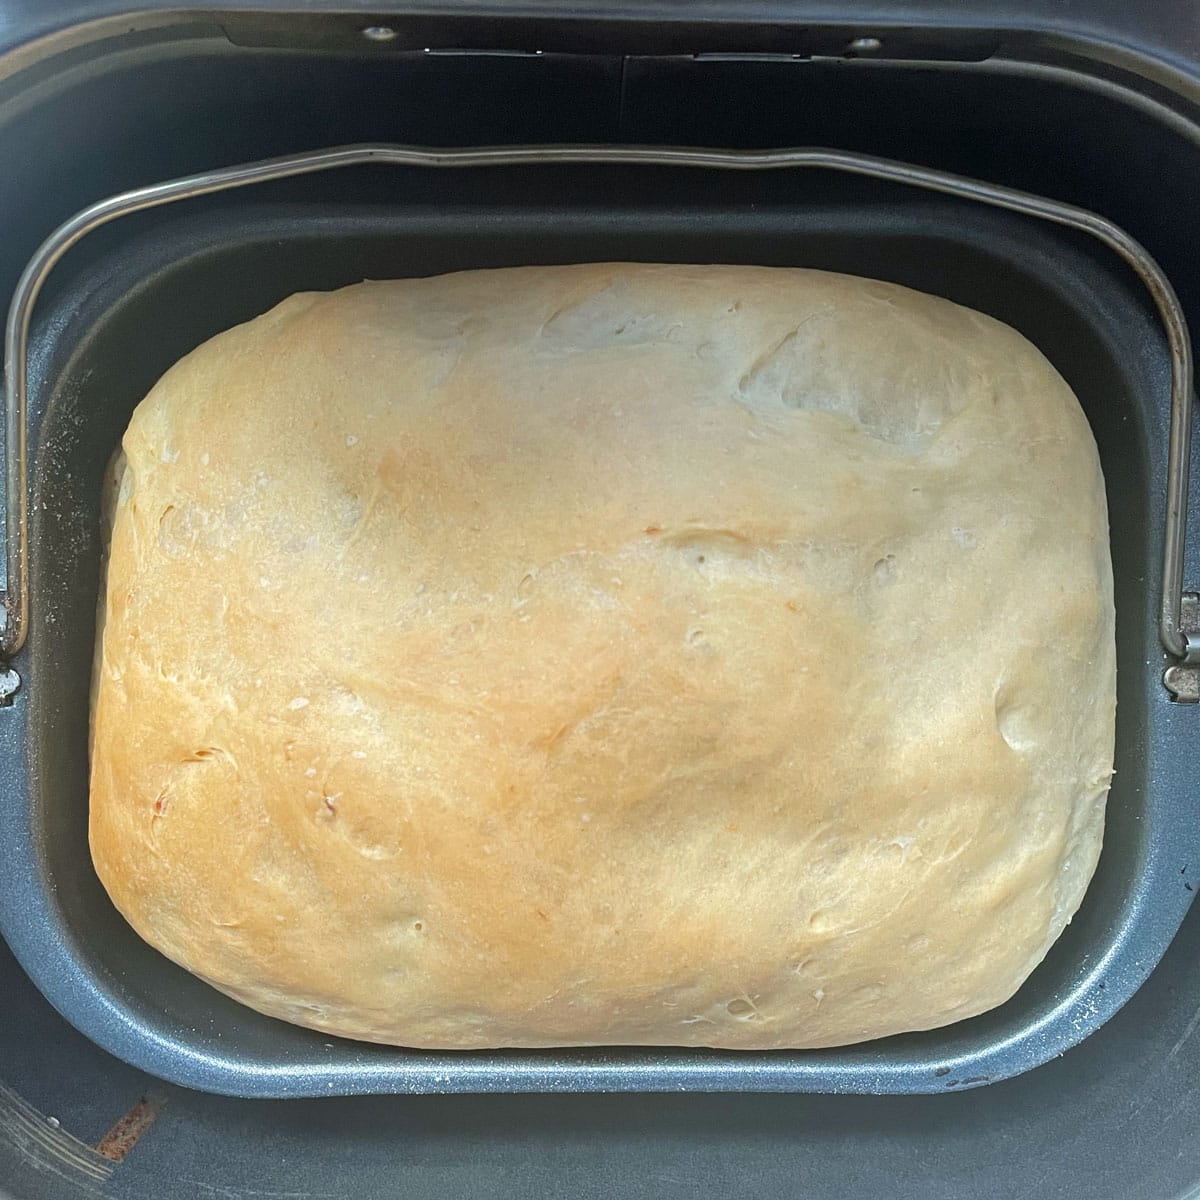 Baked potato bread in bread machine pan.